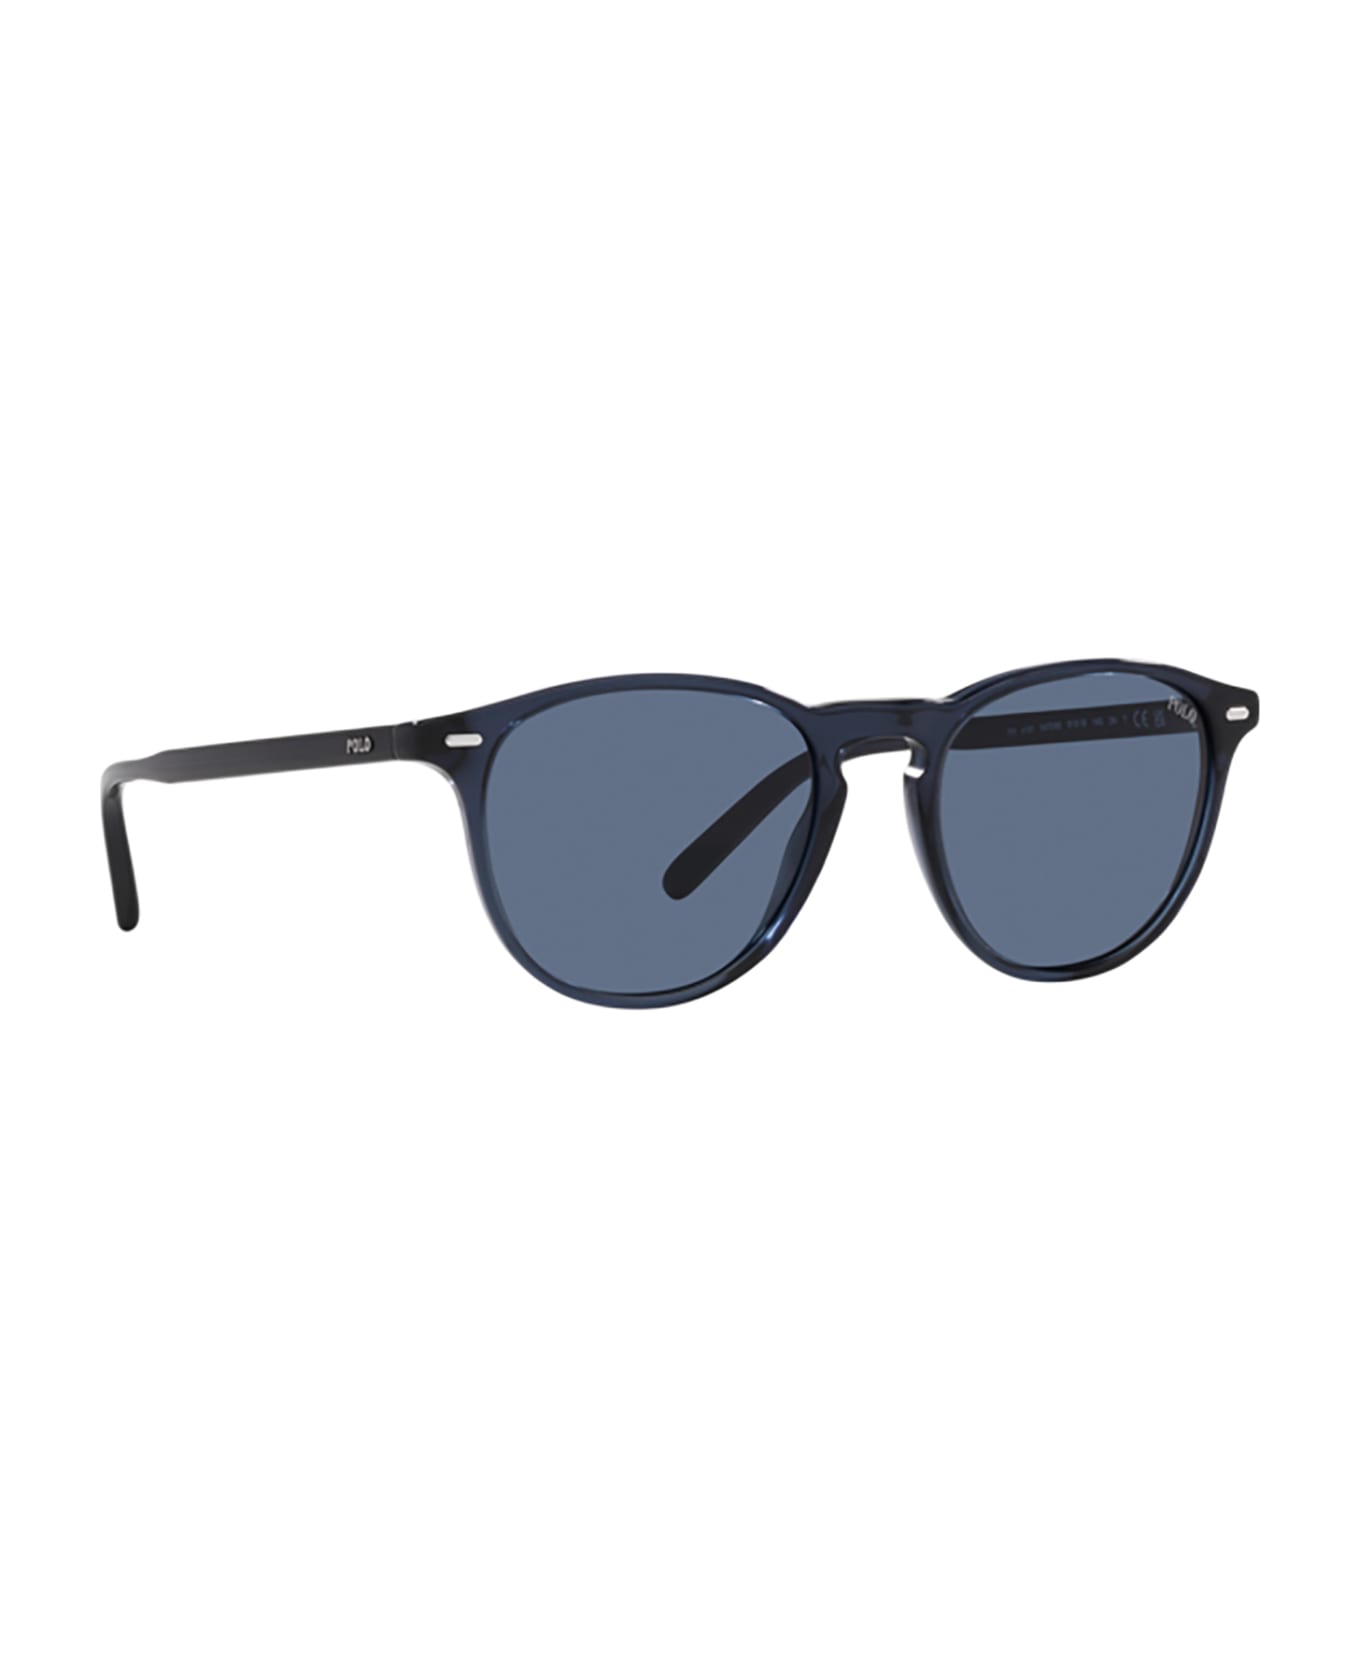 Polo Ralph Lauren Ph4181 Shiny Transparent Navy Blue Sunglasses - Shiny transparent navy blue